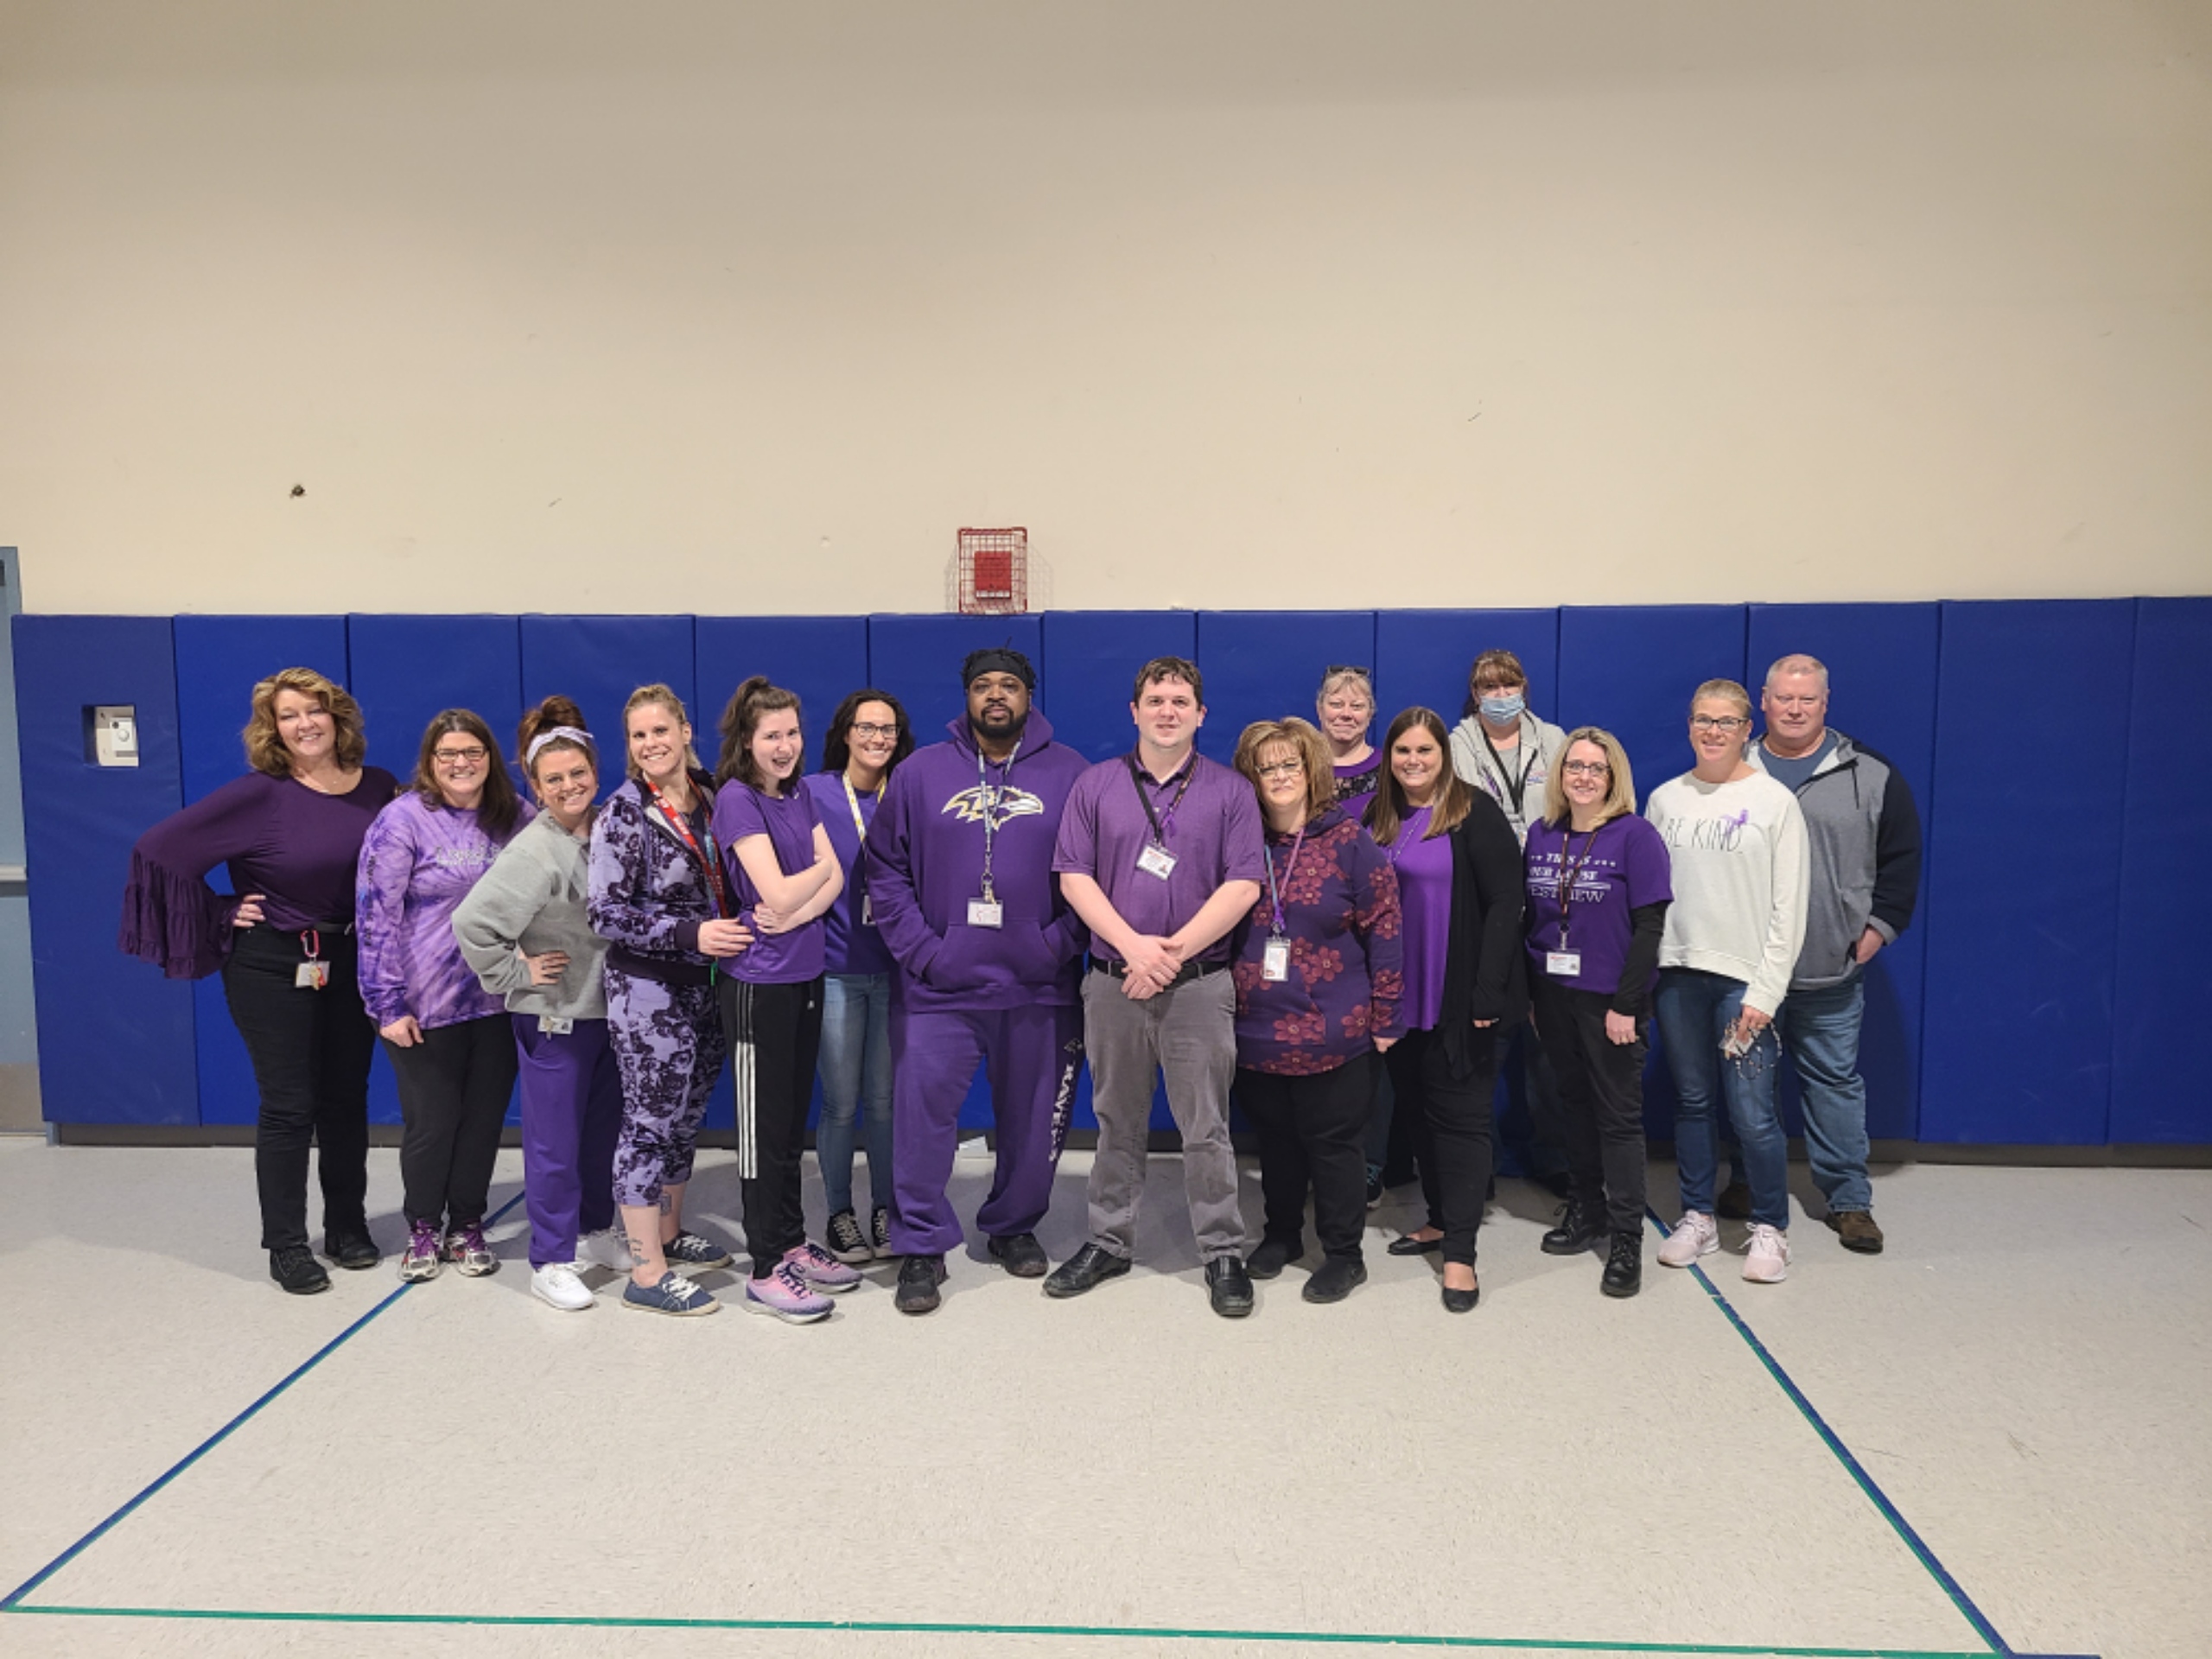 Westview staff wearing purple